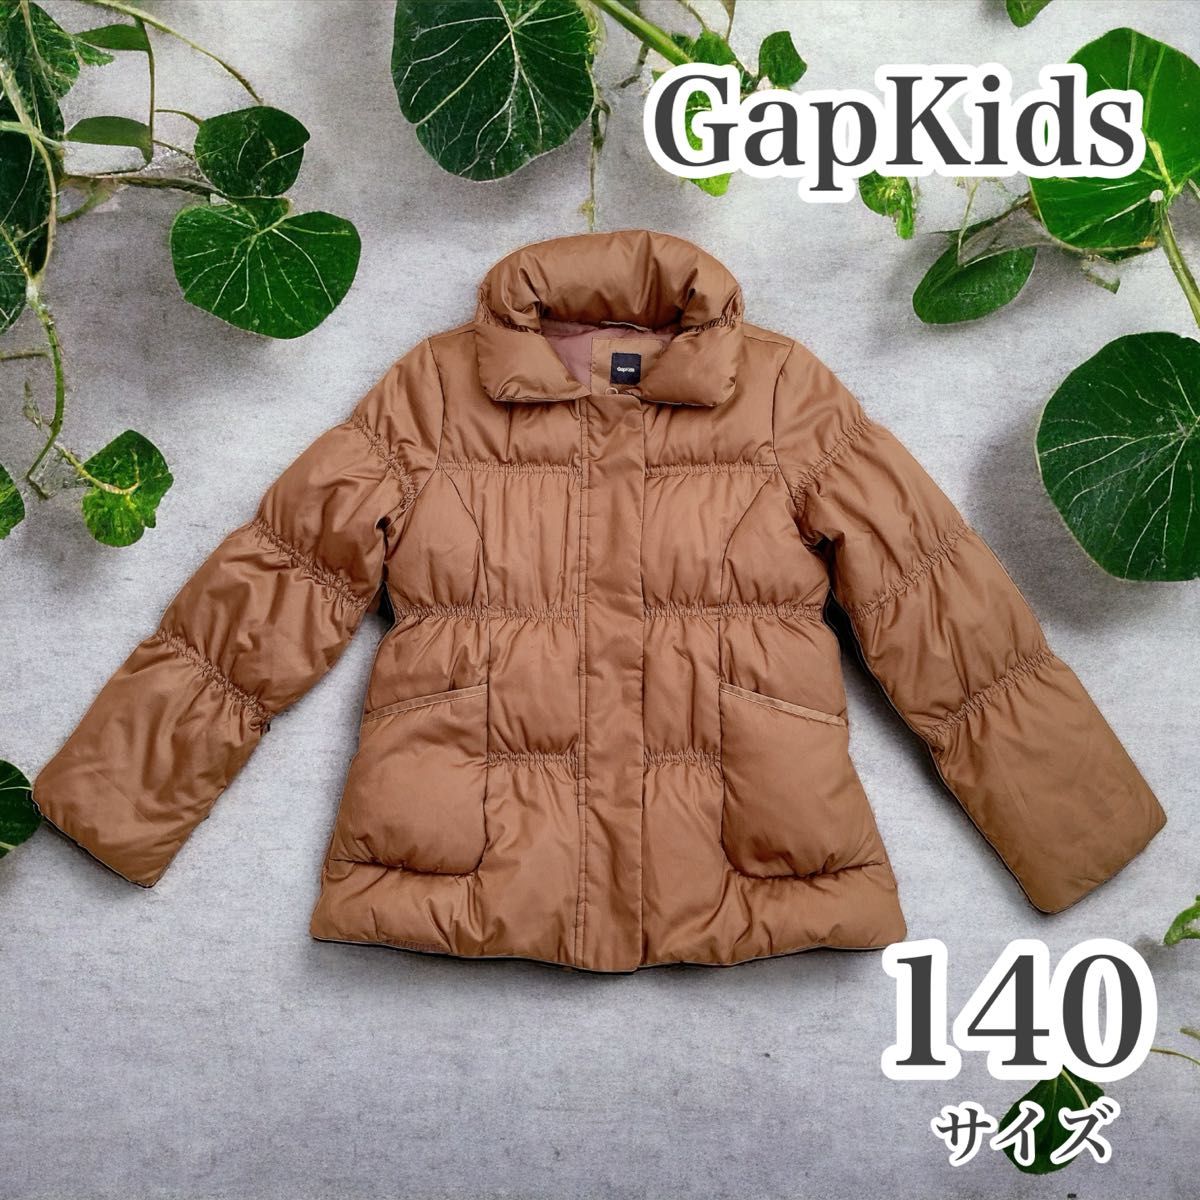 GapKids/ギャップキッズ/140/ダウンジャケット/茶色/ブラウン